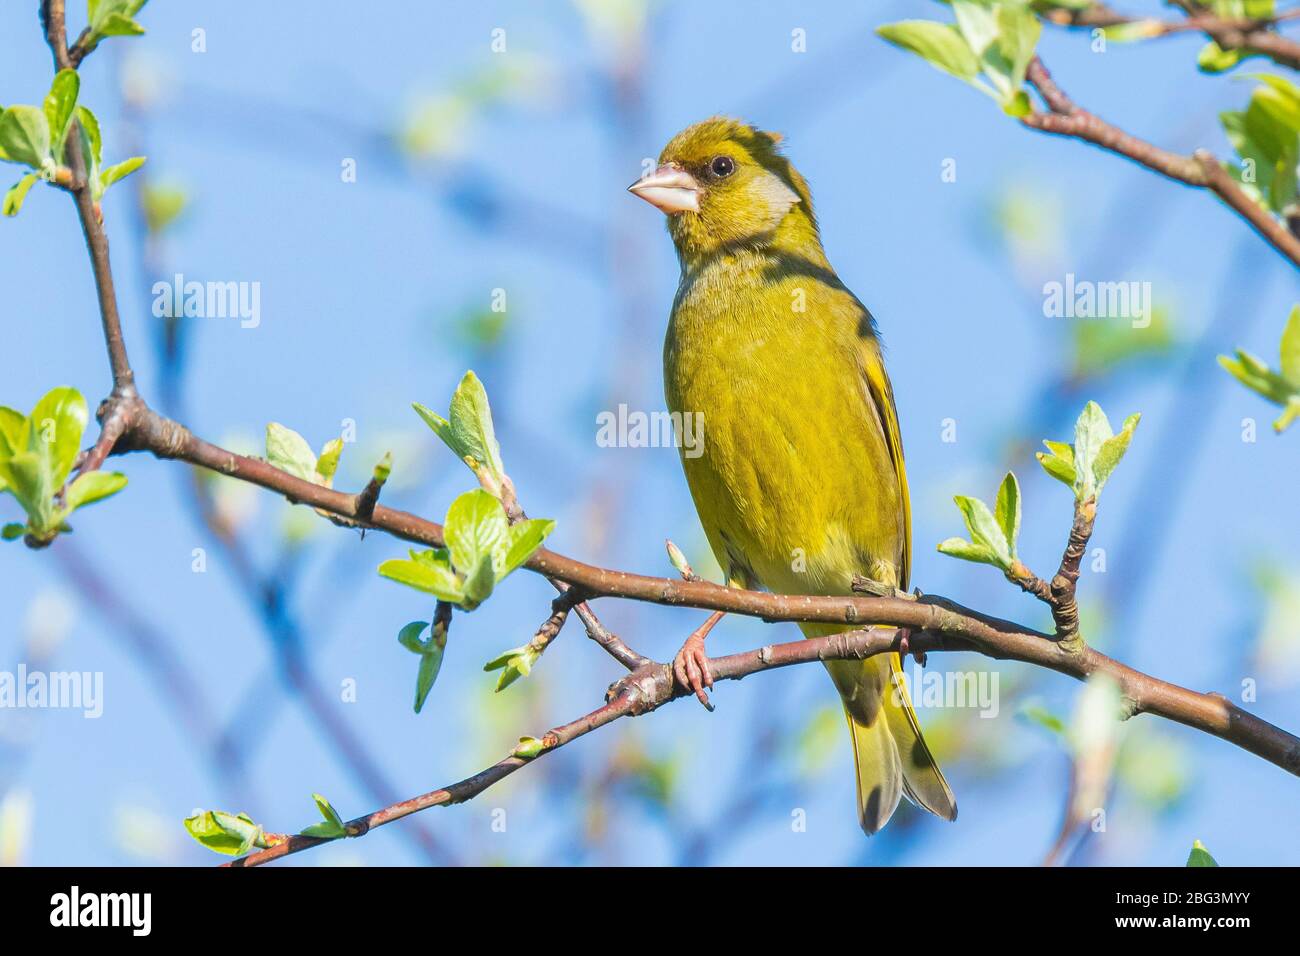 Colorato verde uccello maschio Chloris cloris canto a Springtime, cielo azzurro chiaro Foto Stock